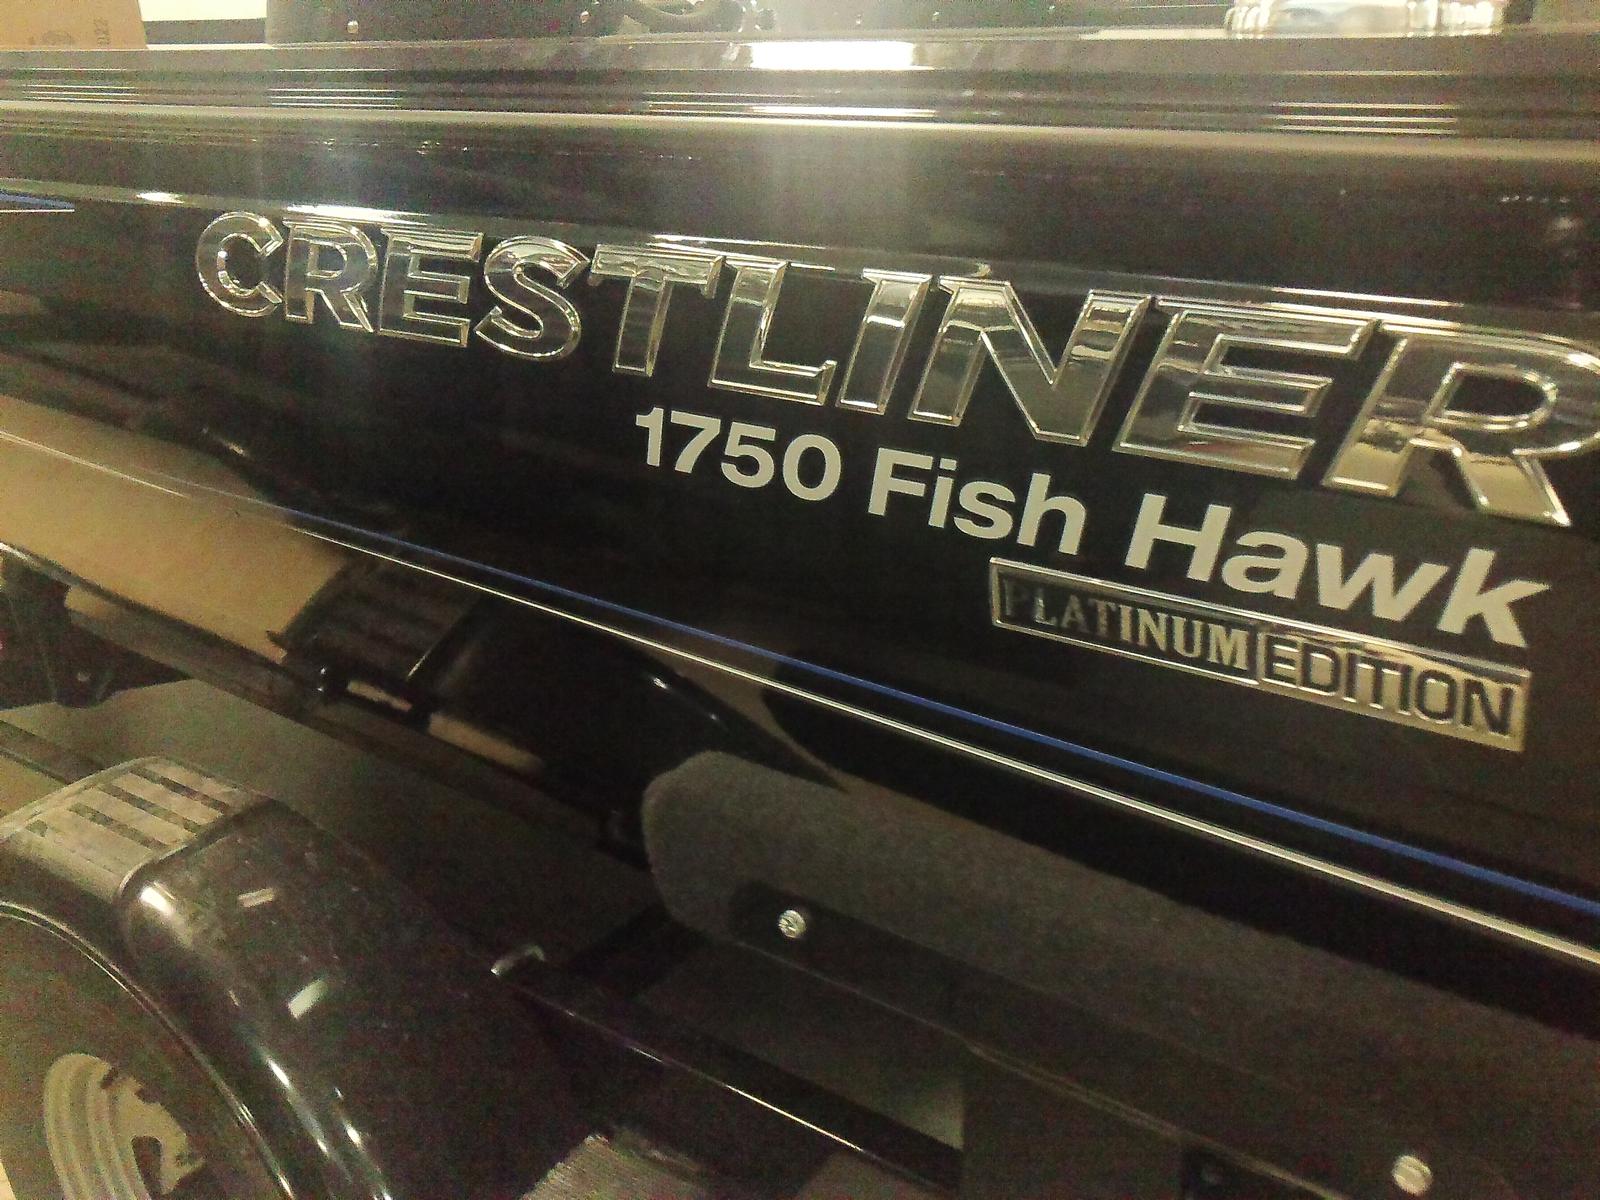 Crestliner 1750 Fish Hawk boats for sale - boats.com